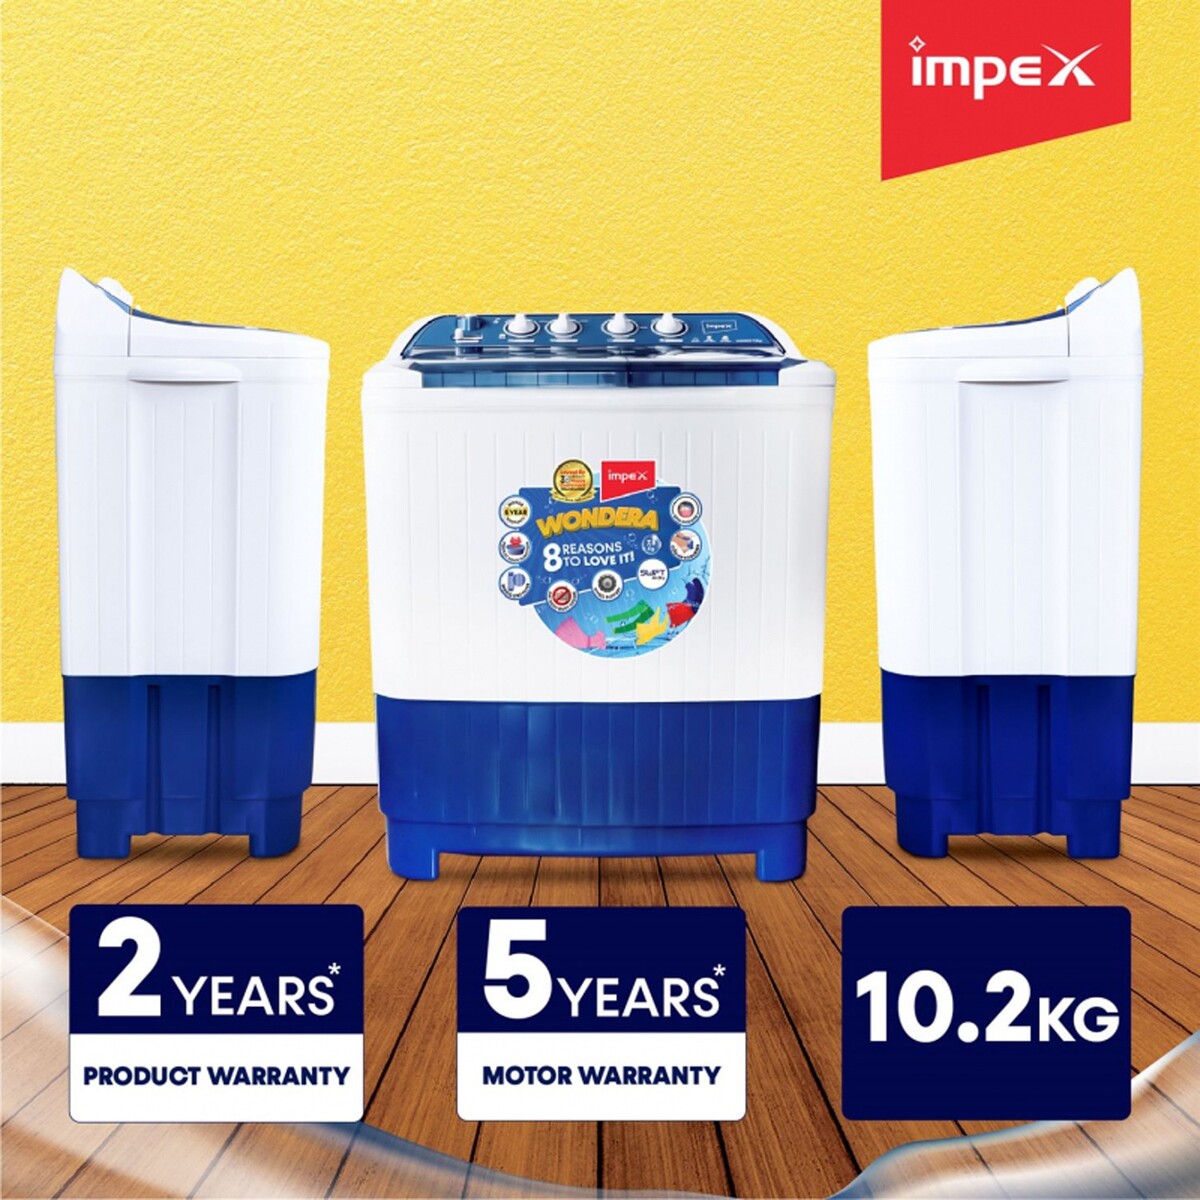 Impex Semi Automatic Washing Machine WONDERA WIZ 75SABL 7.5Kg